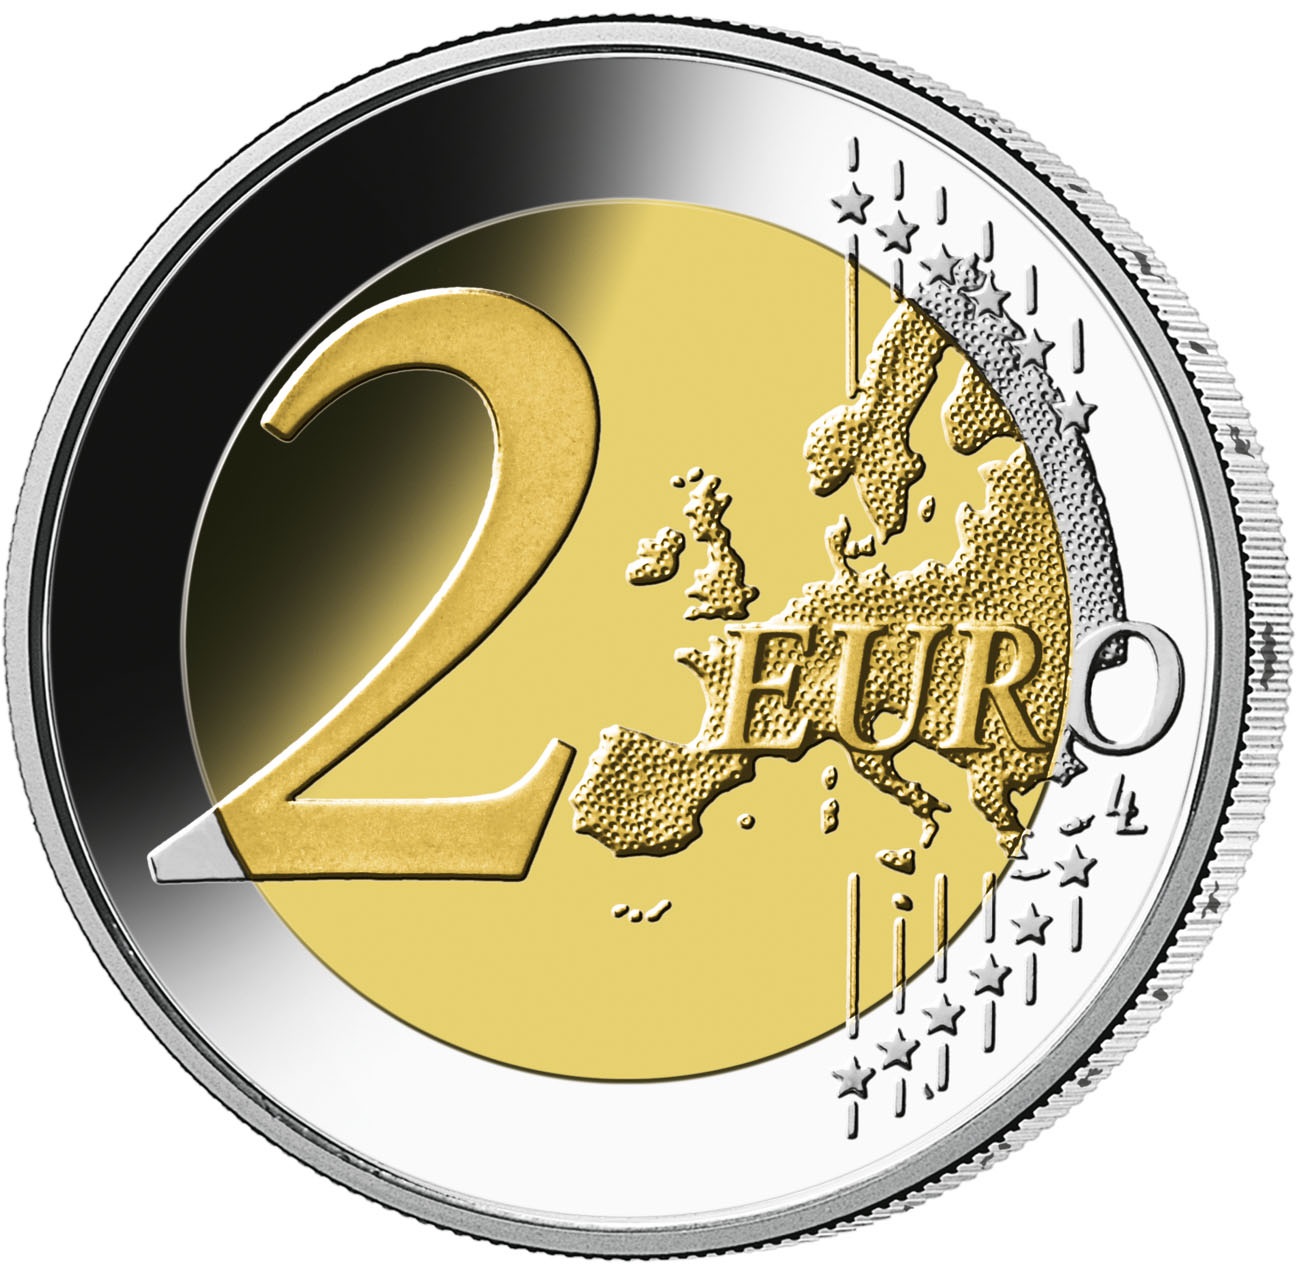 (EUR03.BU.2024.J.2.E.2) 2 euro Germany 2024 J BU - Mecklenburg-Vorpommern Reverse (zoom)